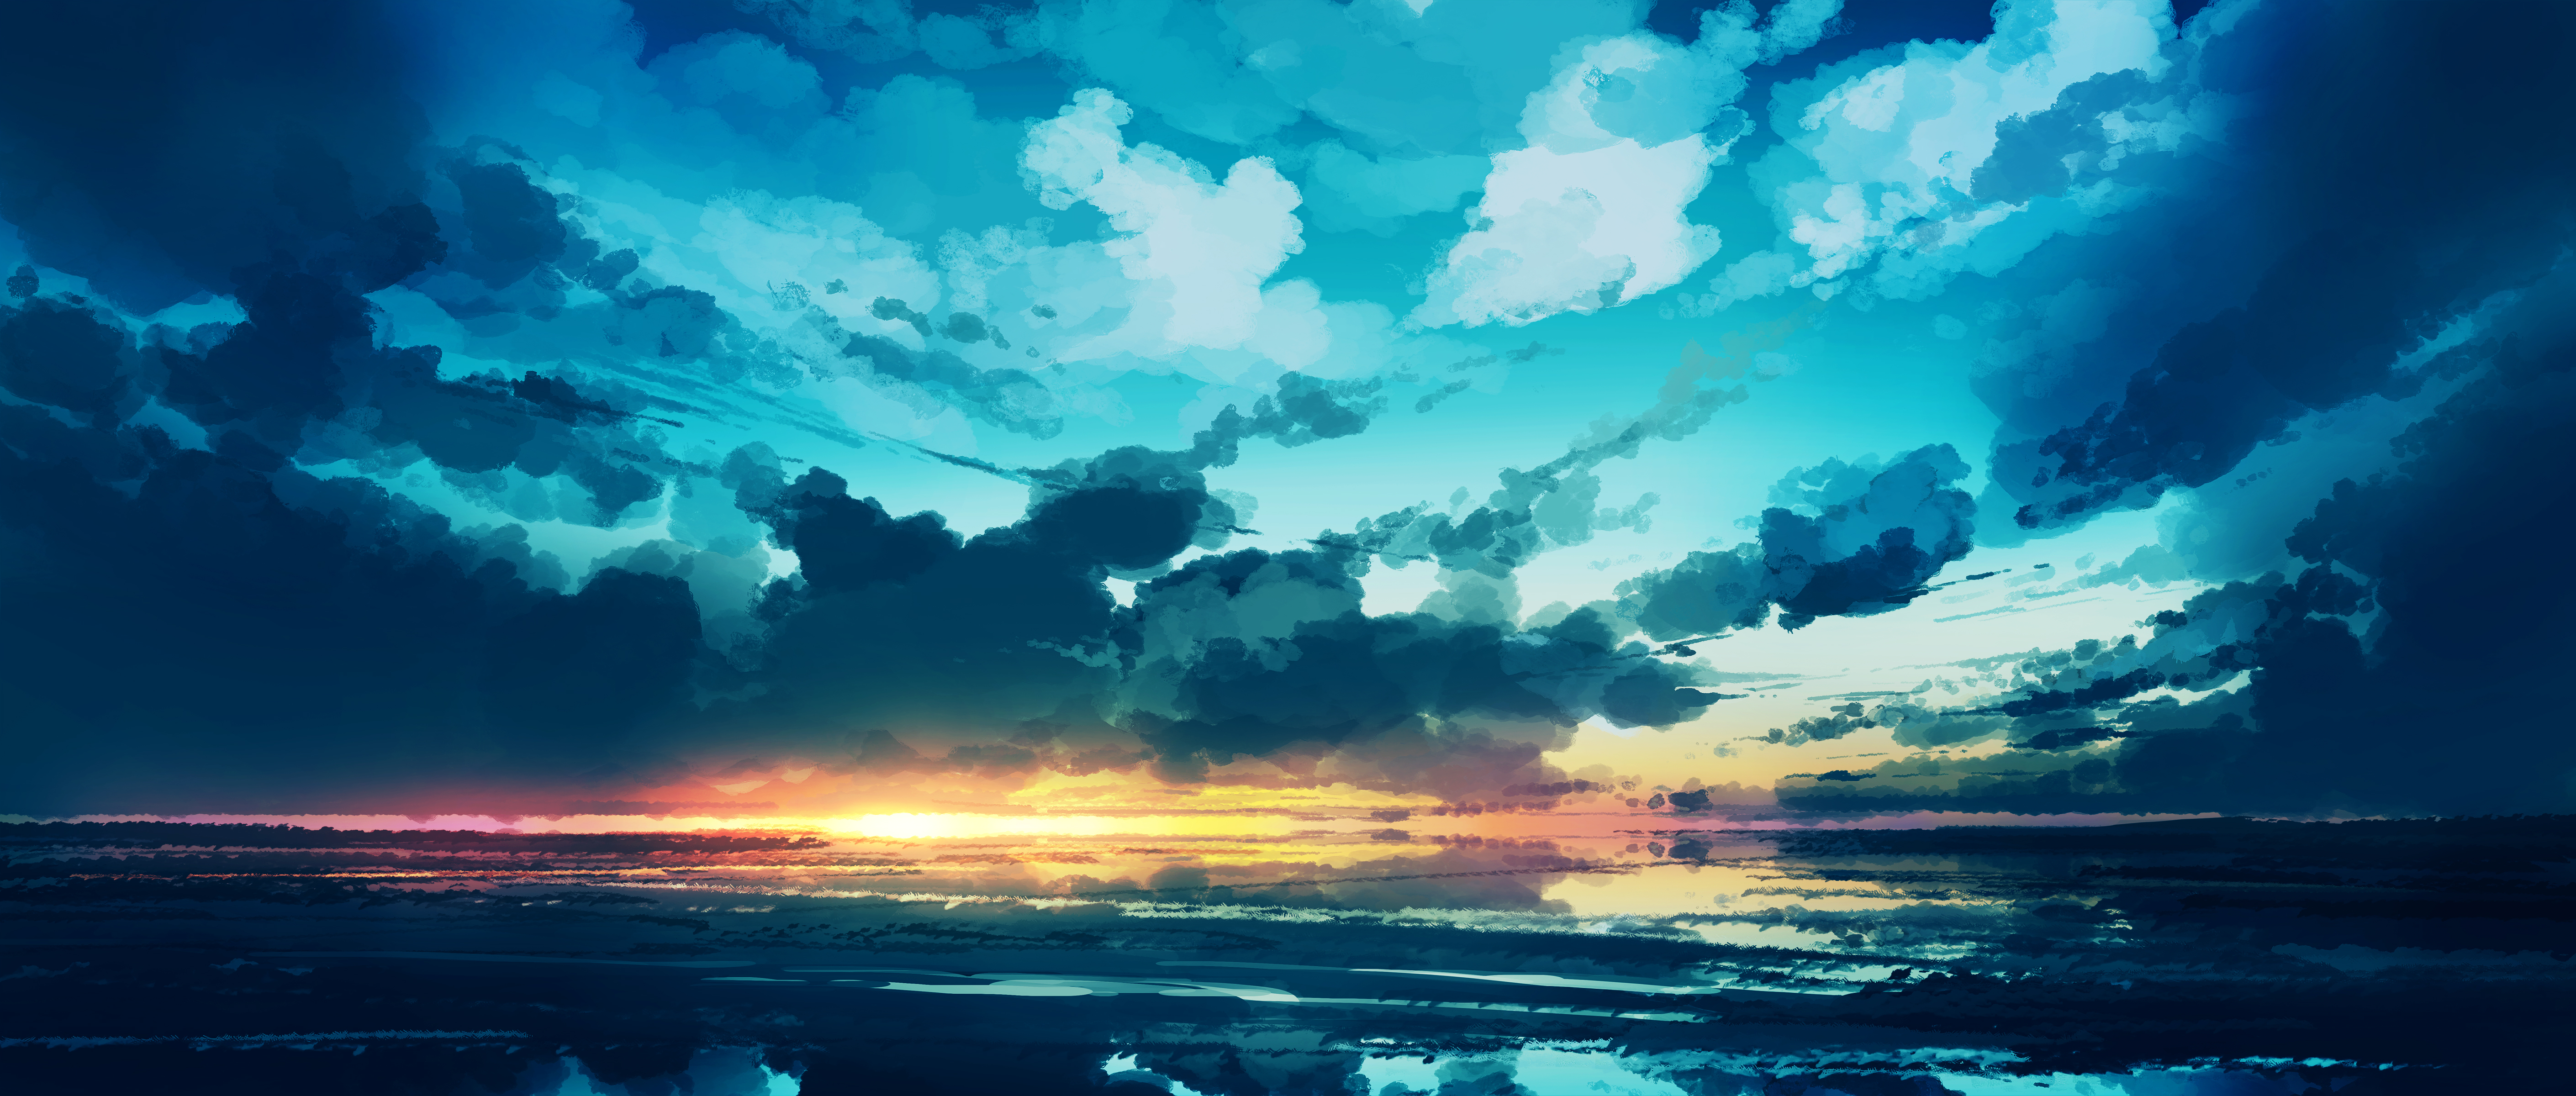 Gracile Digital Art Artwork Illustration Environment Landscape Clouds Sunset Reflection Wide Screen  5640x2400